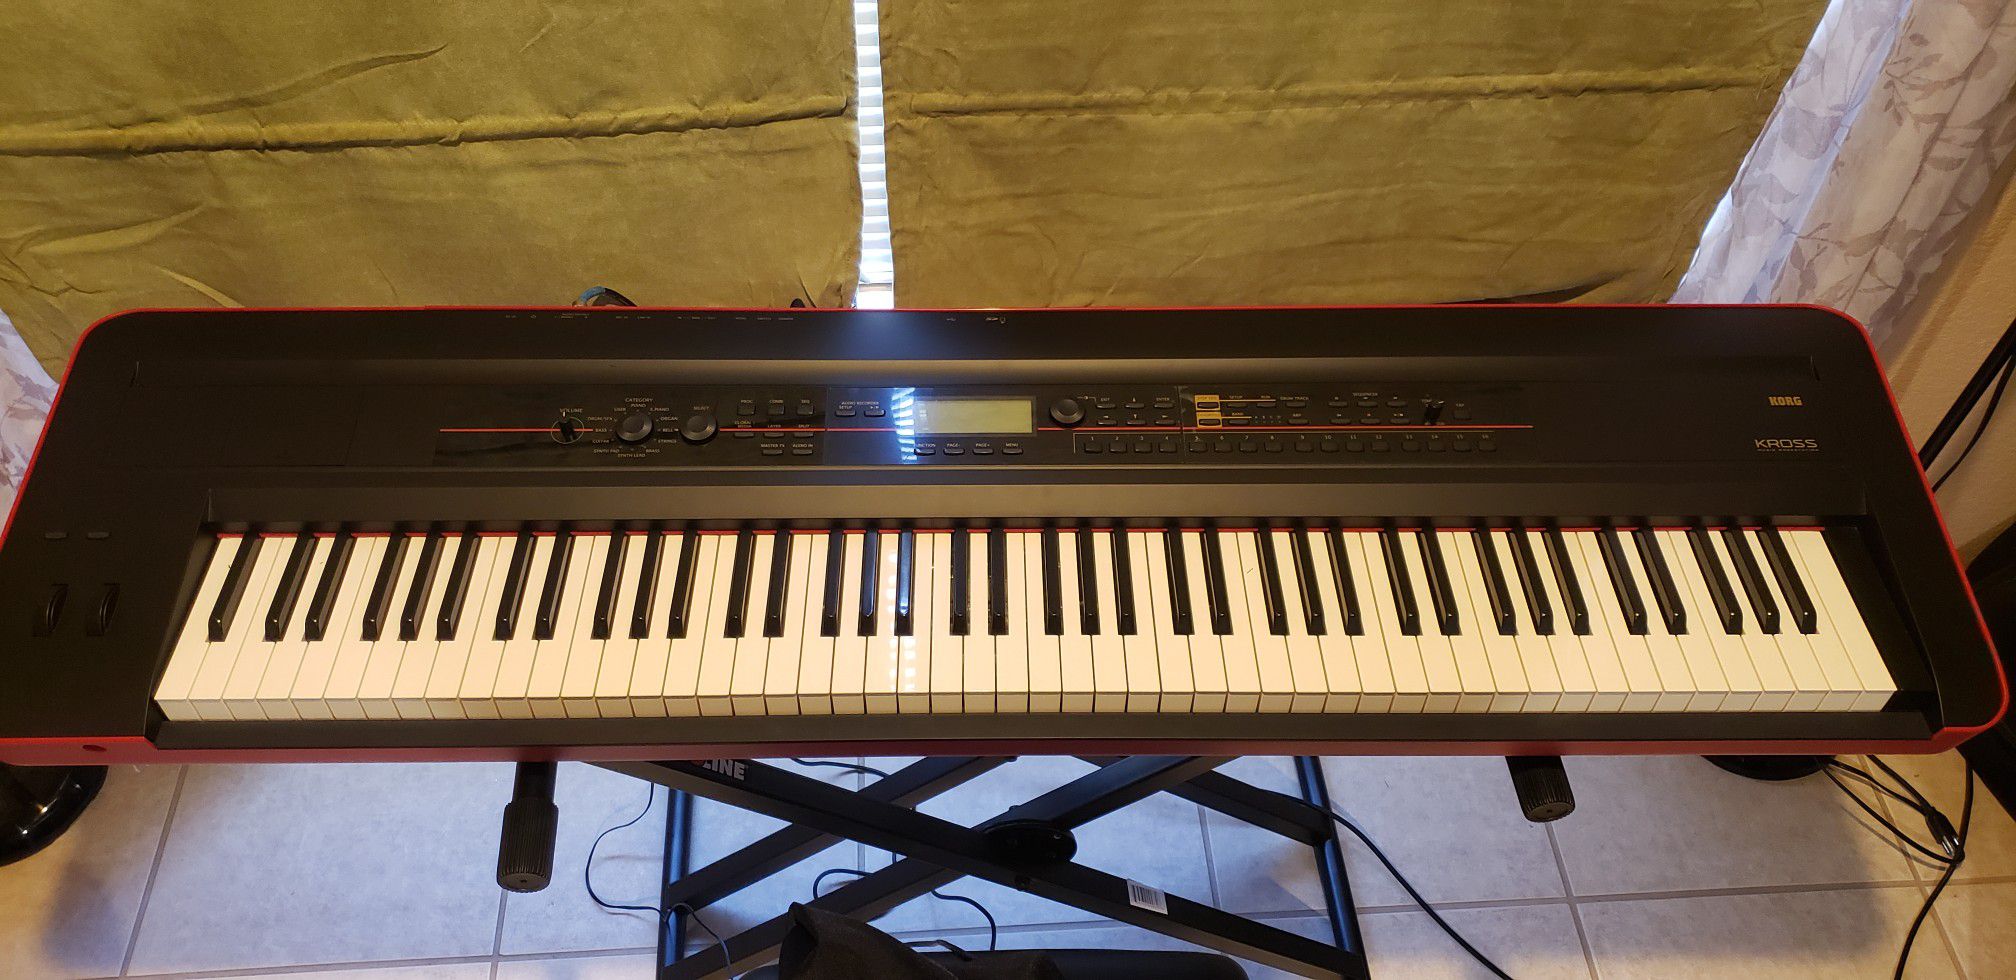 Korg Kross, keyboard stand, keyboard bench, damper pedal, paded case, music sheet stand